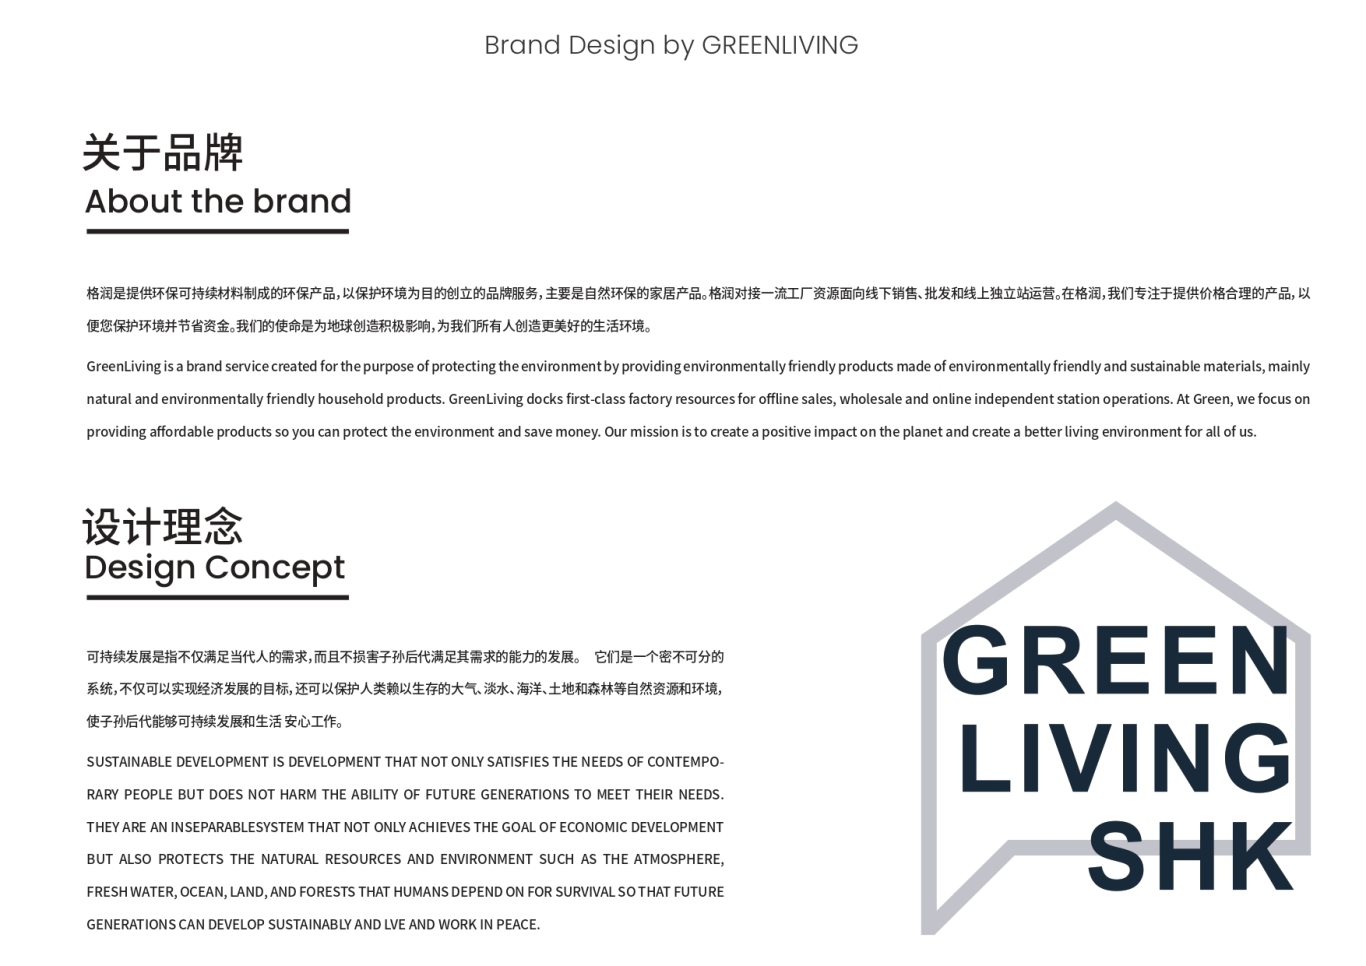 greenliving独立站品牌设计图1